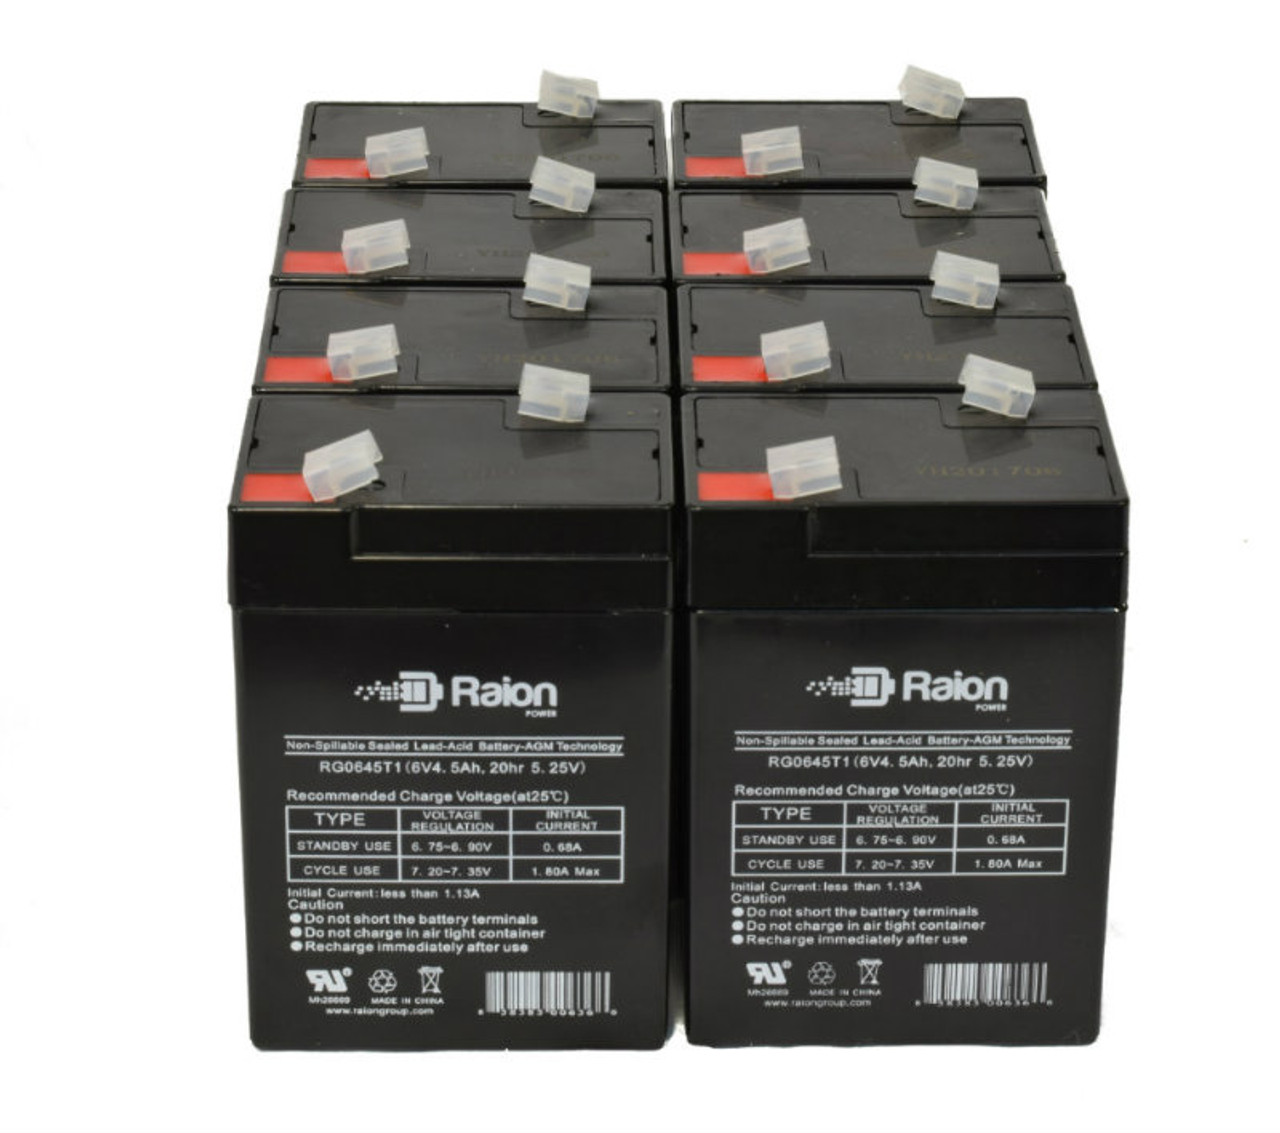 Raion Power RG0645T1 6V 4.5Ah Replacement Medical Equipment Battery for Nellcor Puritan Bennett N-600x Oximax Pulse Oximeter - 8 Pack